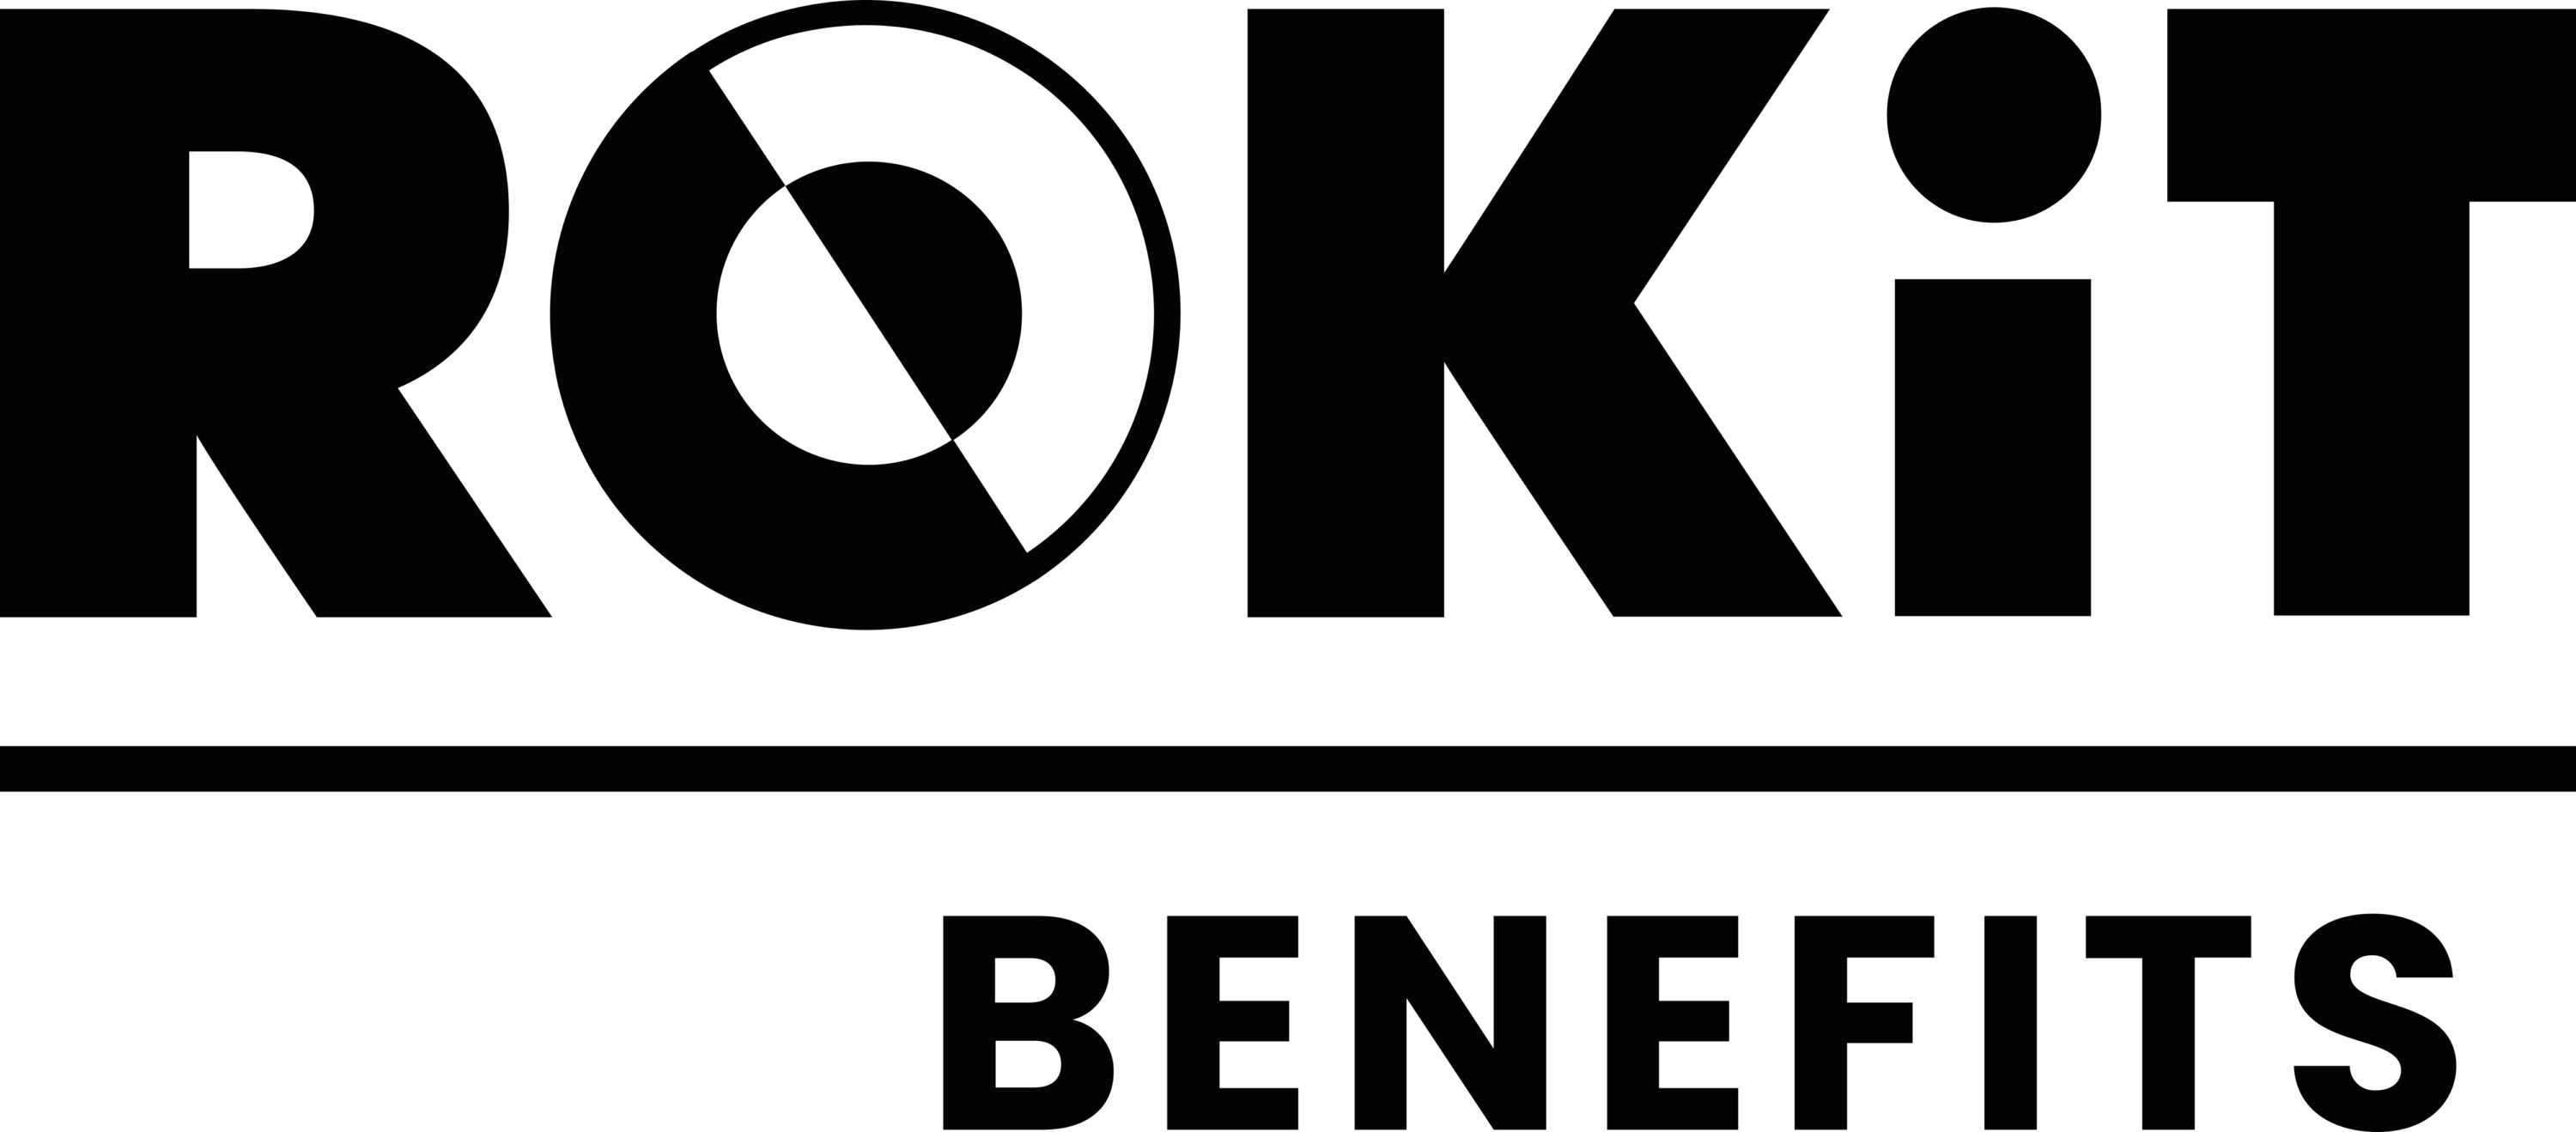 ROKiT Benefits Logo